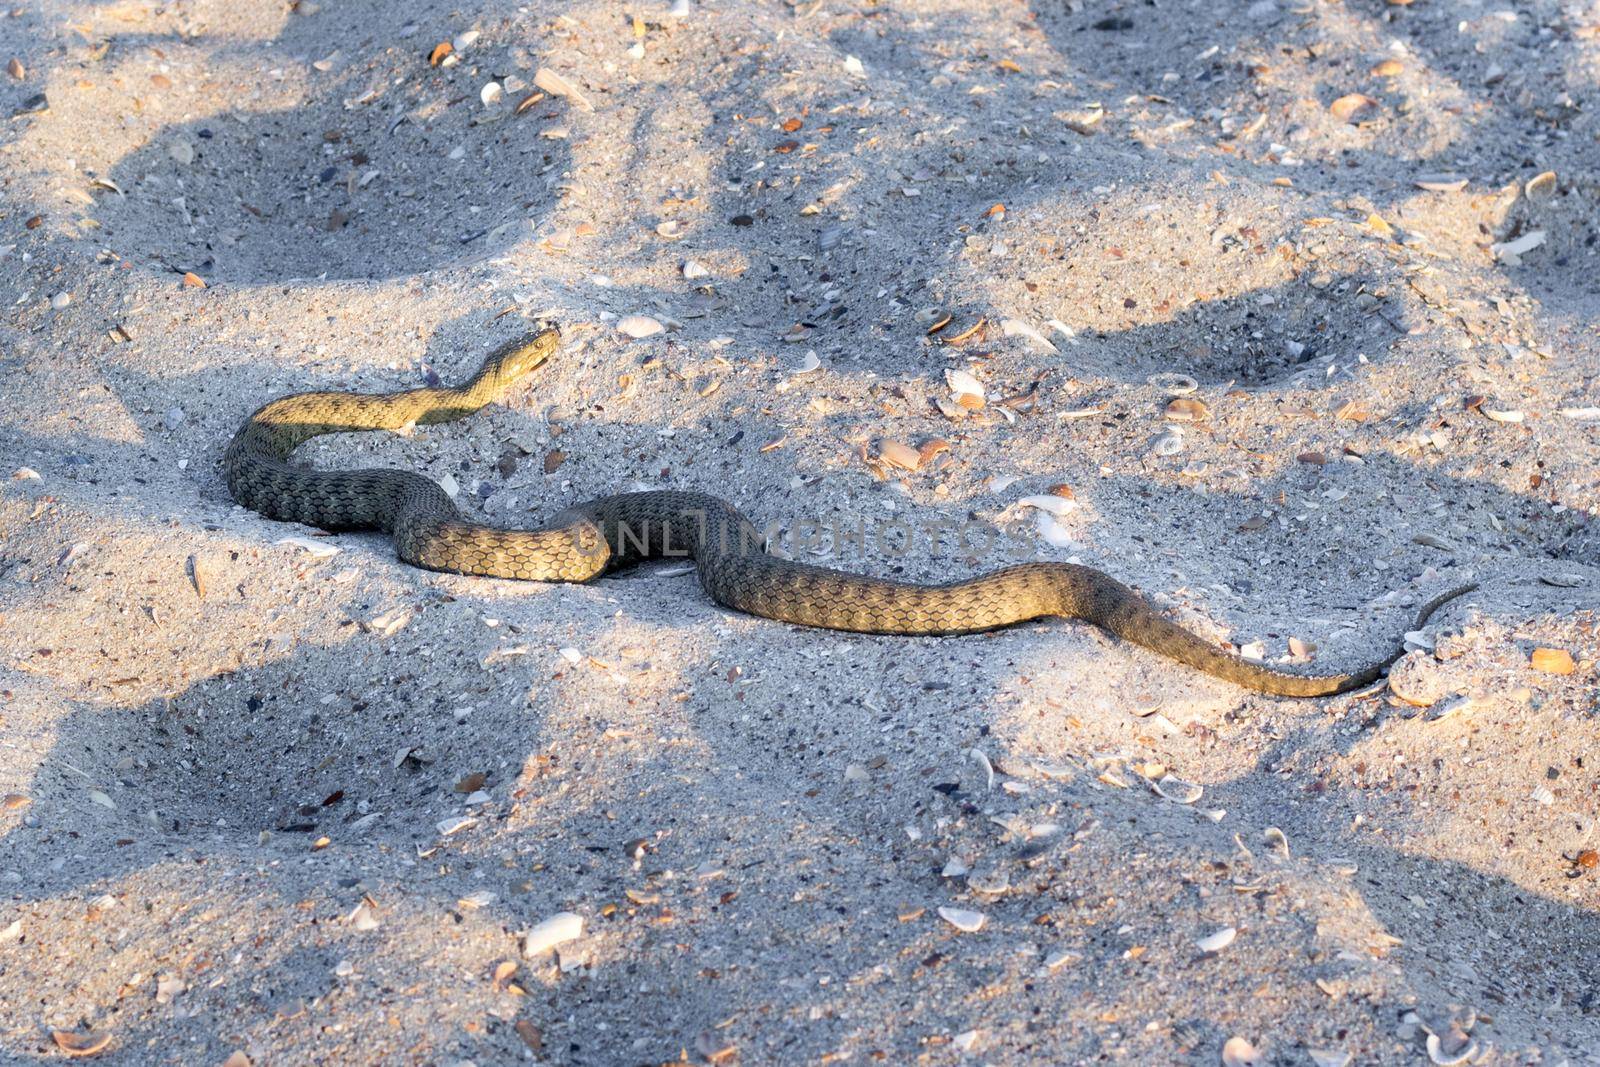 Dangerous poisonous amphibian snake viper Vipera Renardi on beach sands by VeraVerano